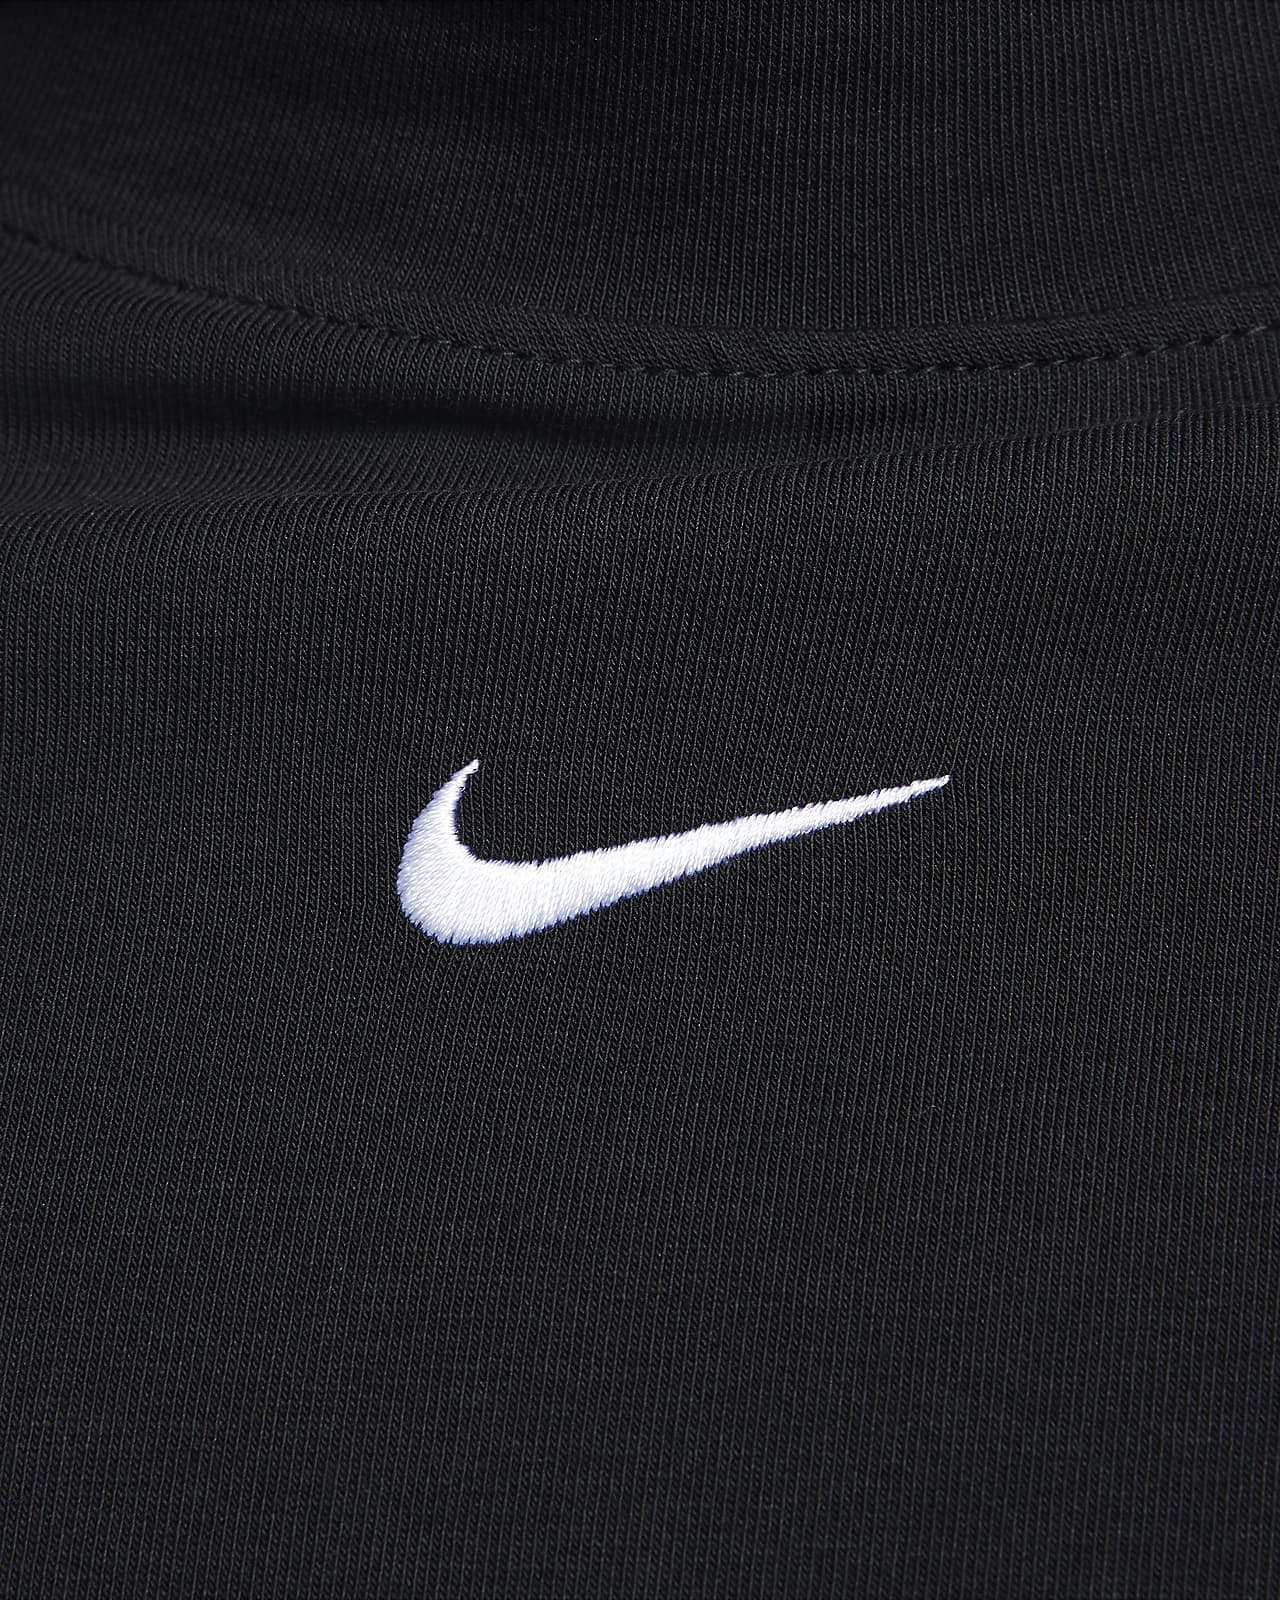 Nike Sportswear Long-Sleeve Top. Essentials Women\'s Mock Collection